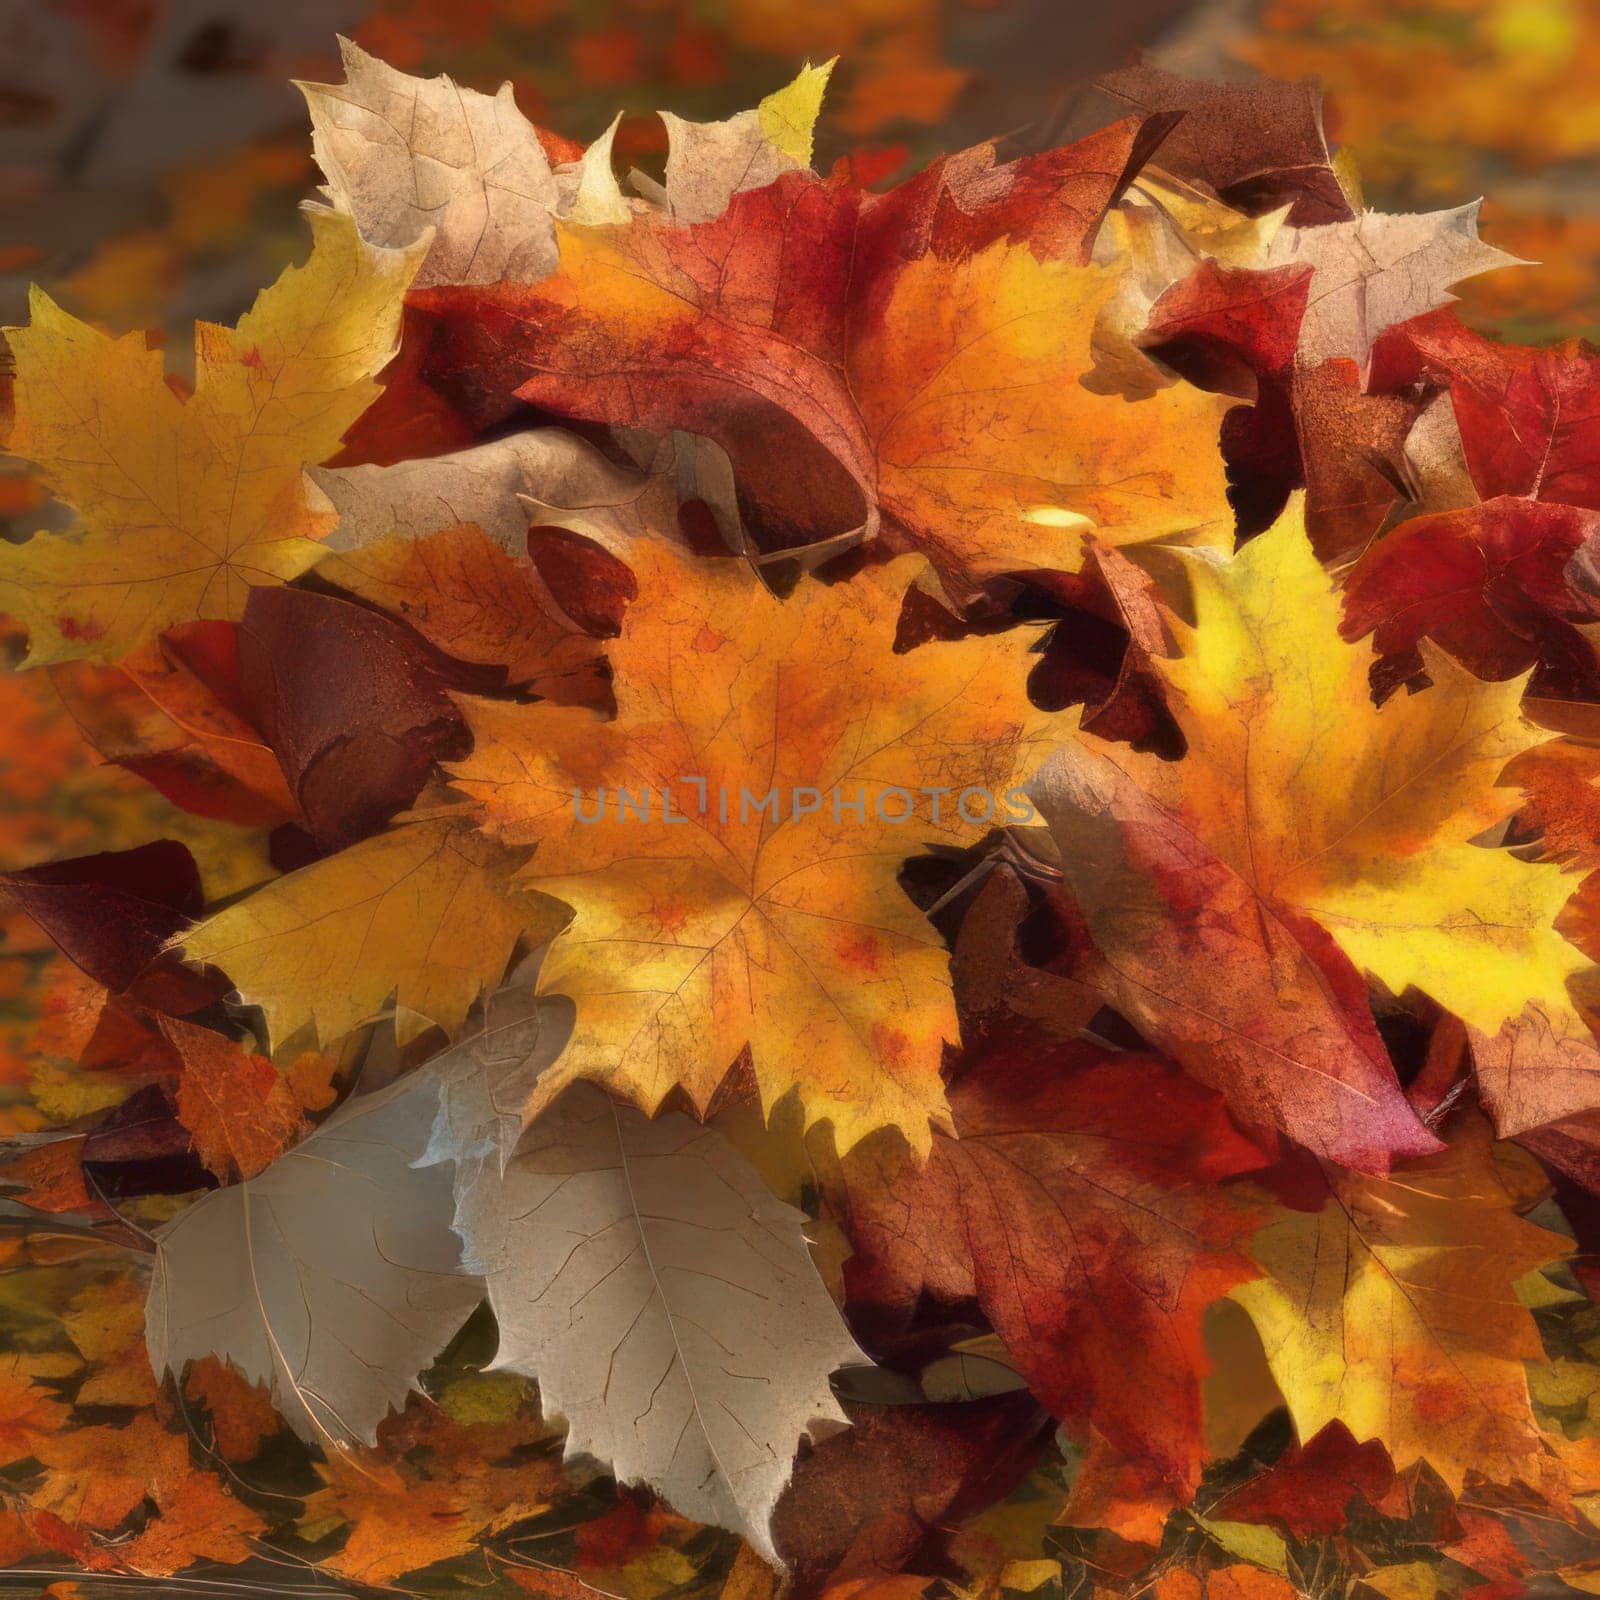 Autumn leaves by nolimit046